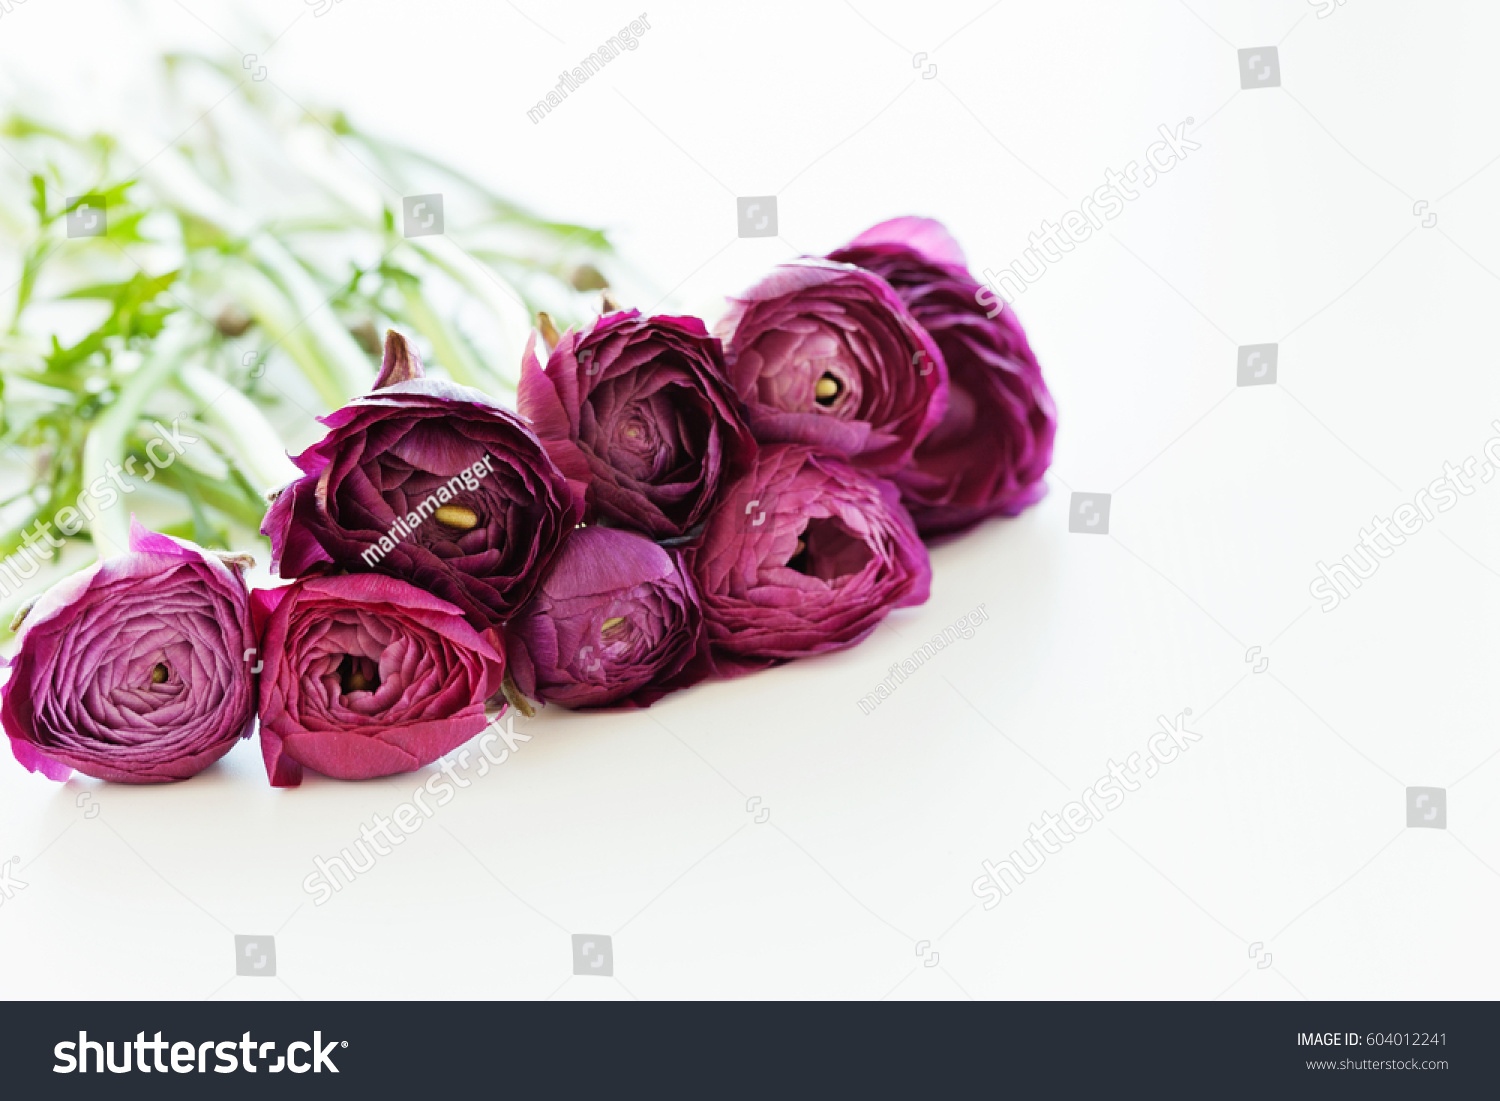 Bouquet Dark Burgundy Ranunculus Flowers On Nature Stock Image 604012241